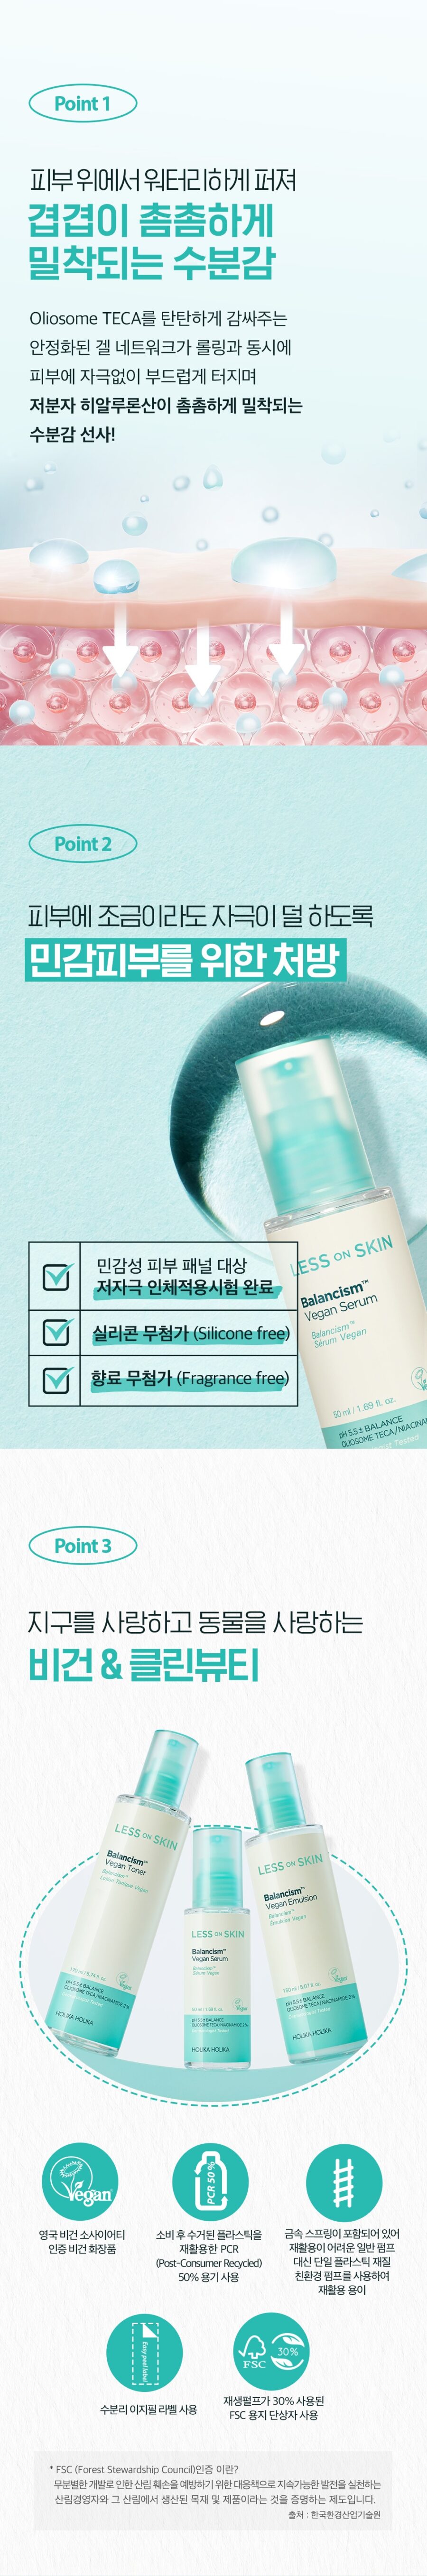 Holika Holika Less On Skin Balancism Vegan Serum korean skincare product online shop malaysia china india4